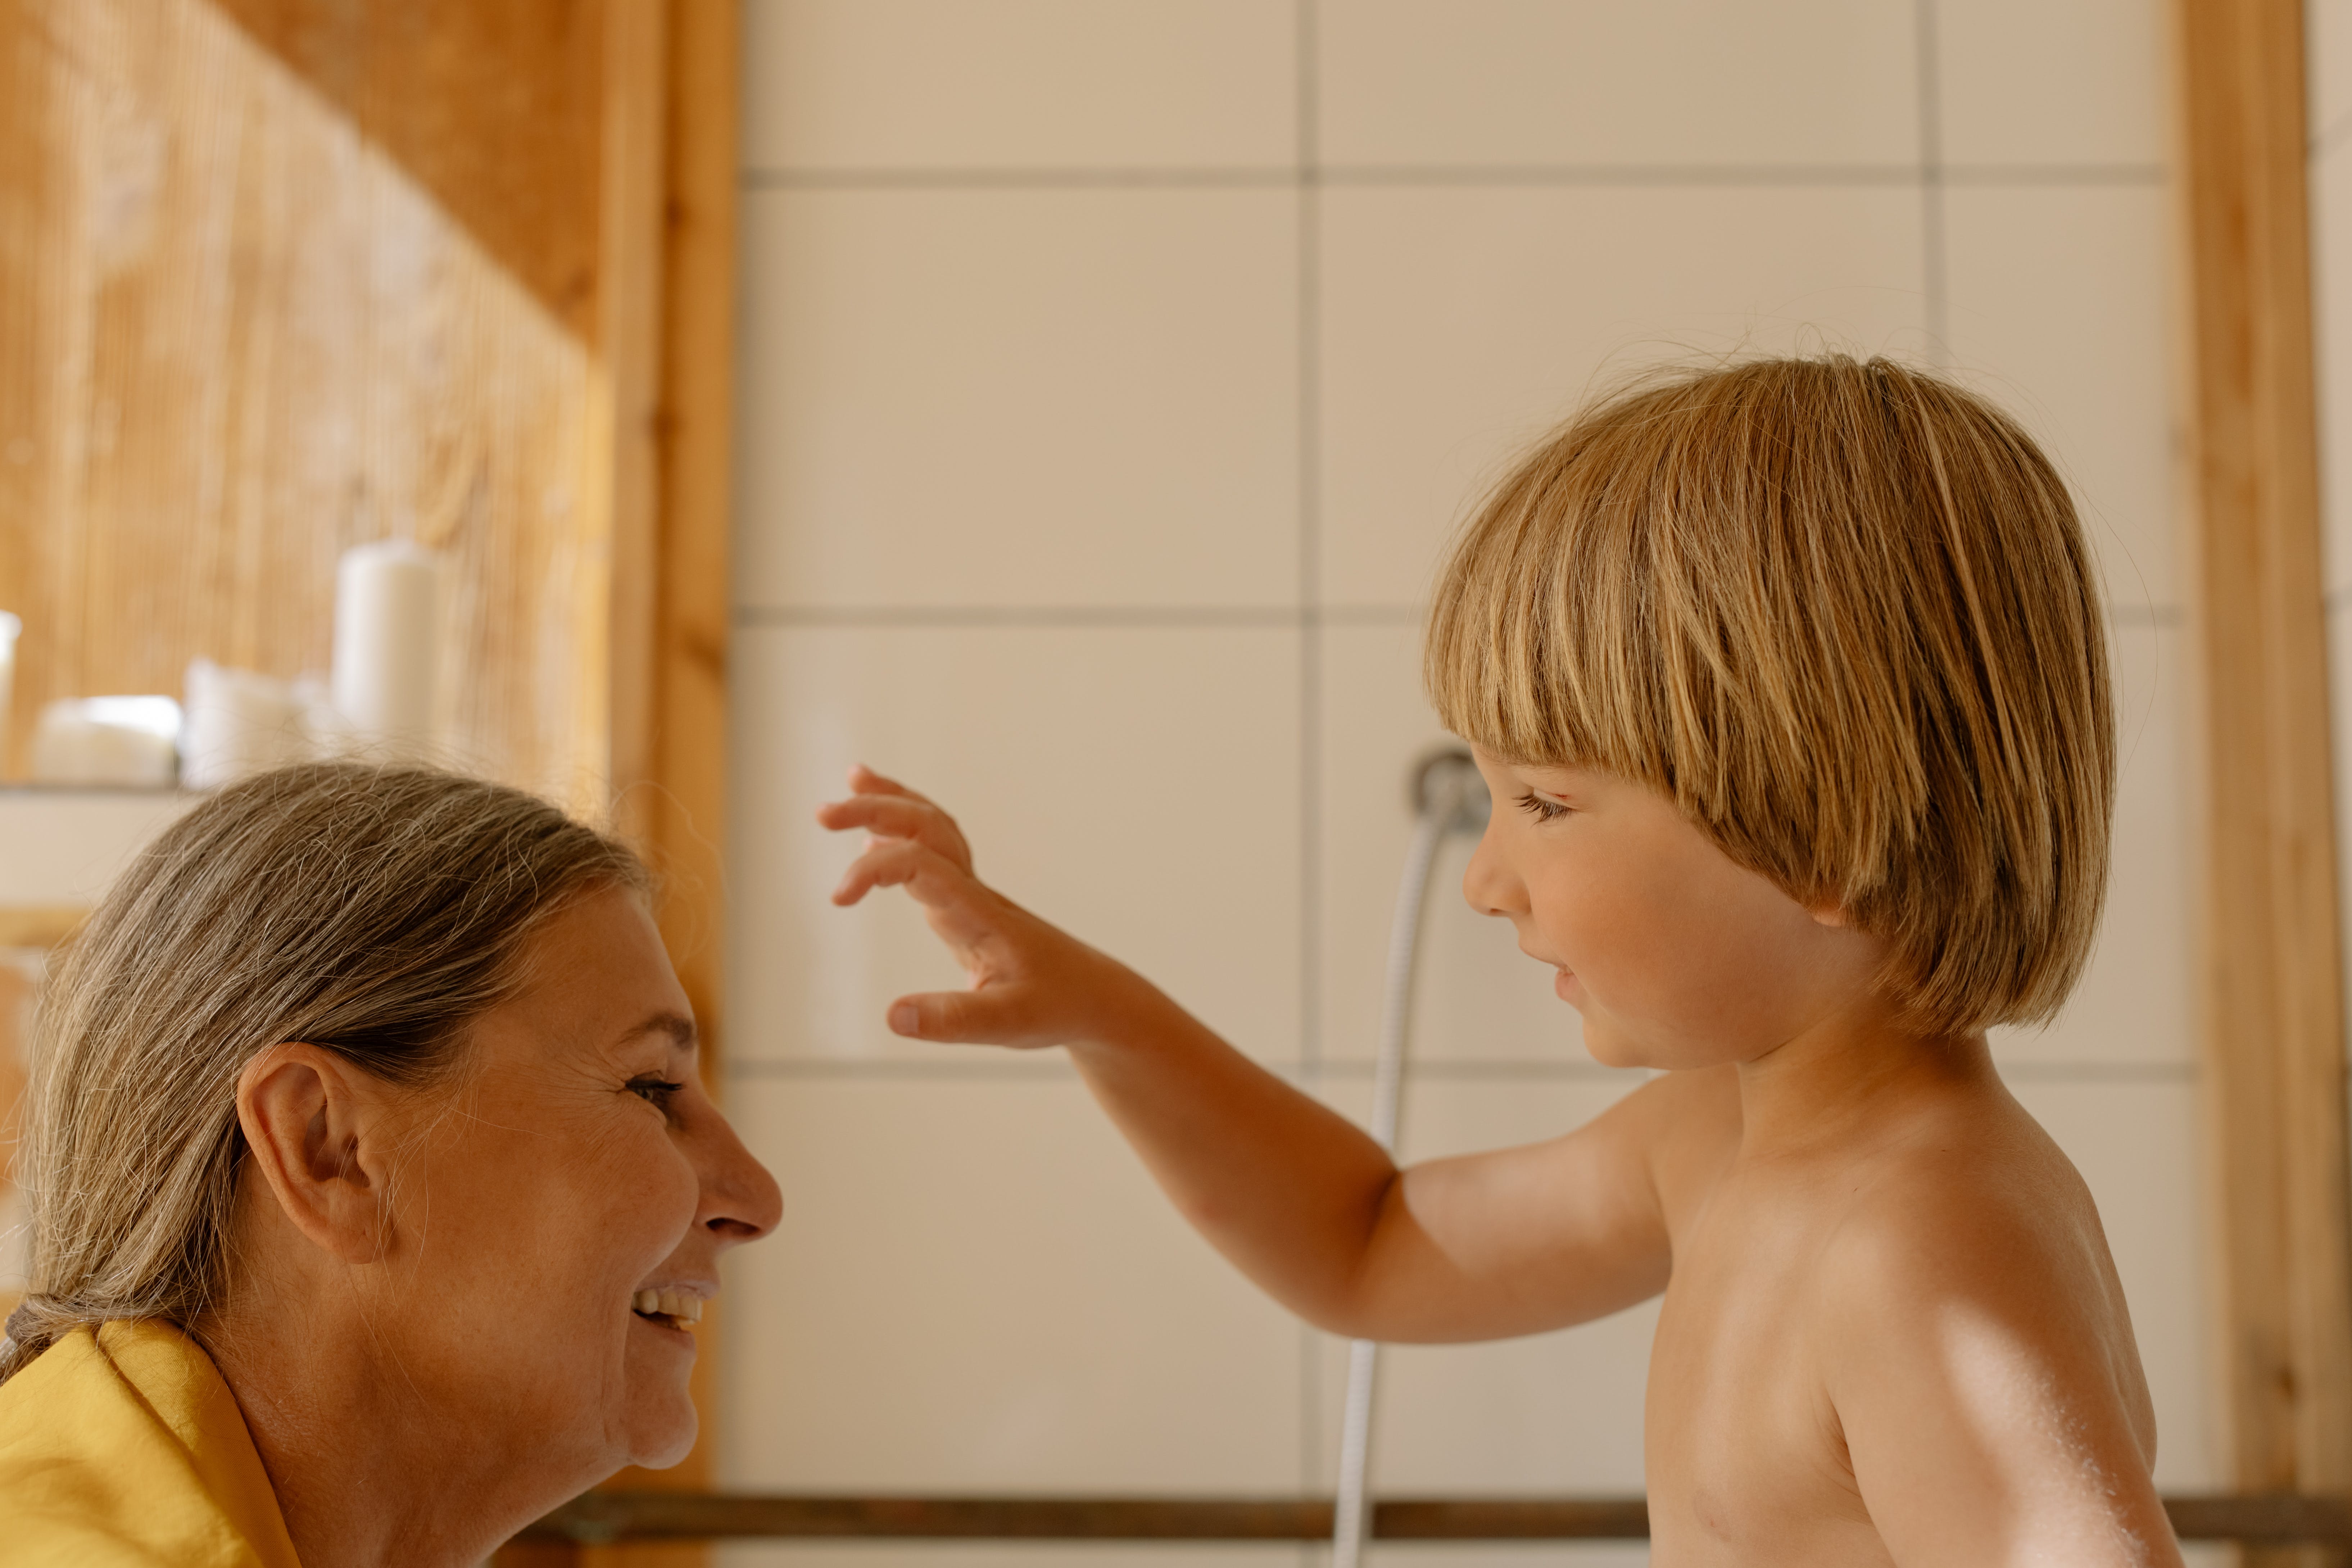 A woman bathing her grandson | Source: Pexels